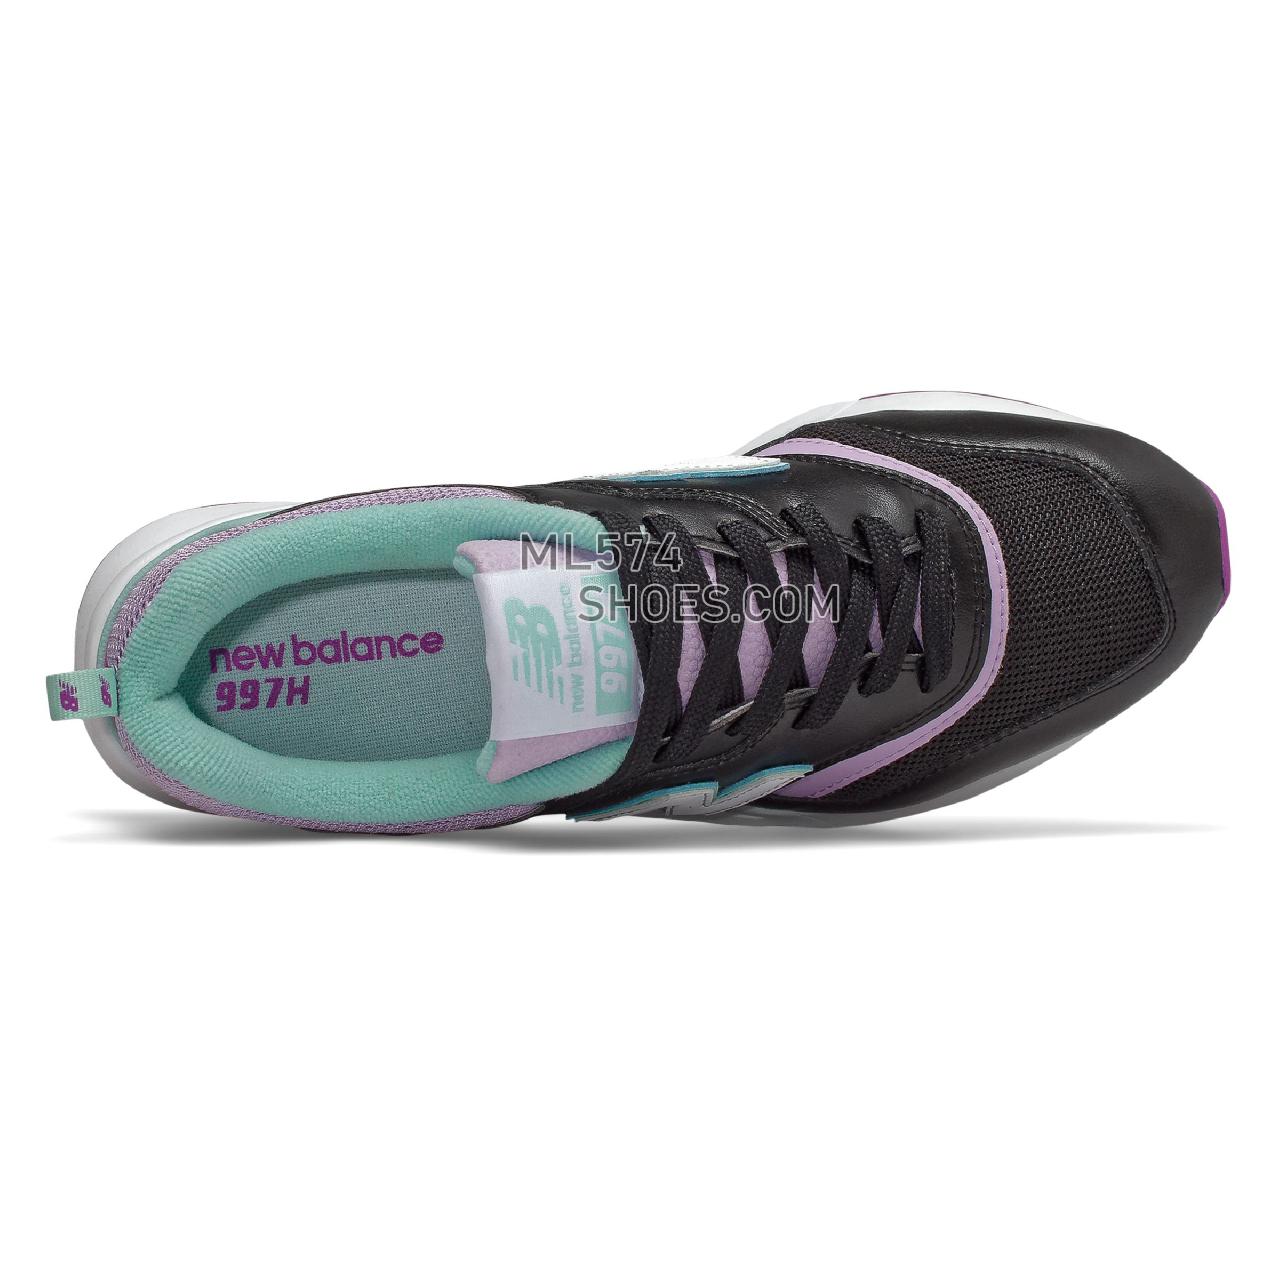 New Balance 997H - Women's Classic Sneakers - Purple with Black - CW997HMC